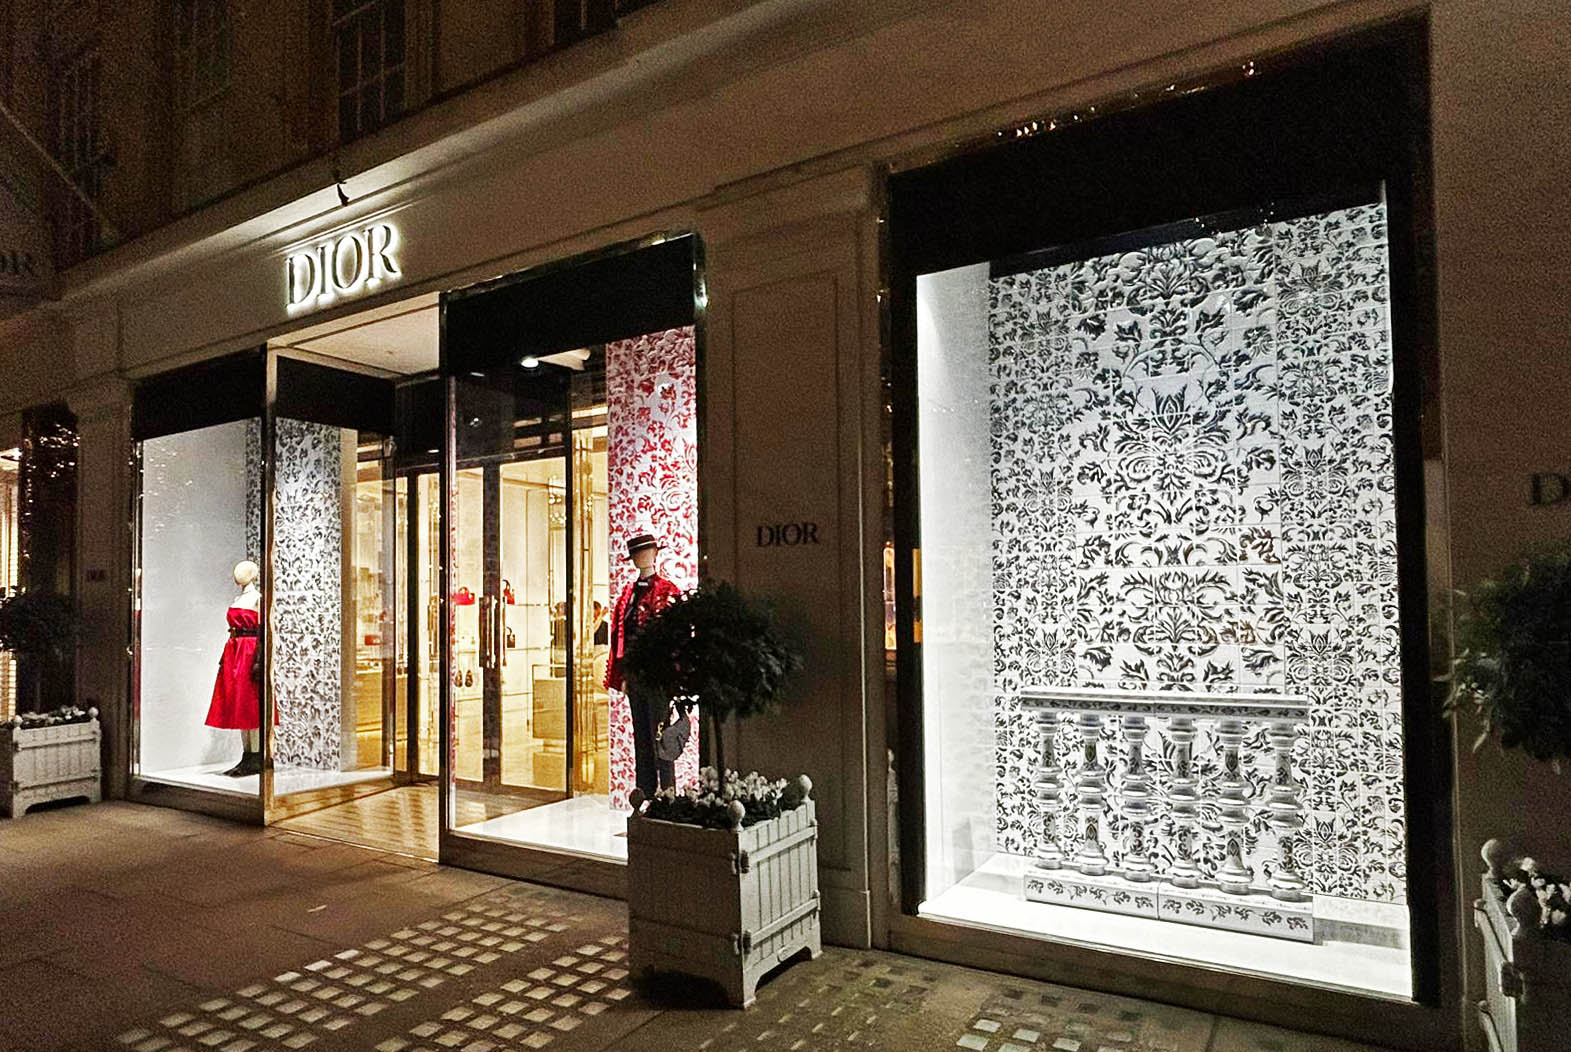 Dior, Cruise Collection, Sloane Street, Londra, UK